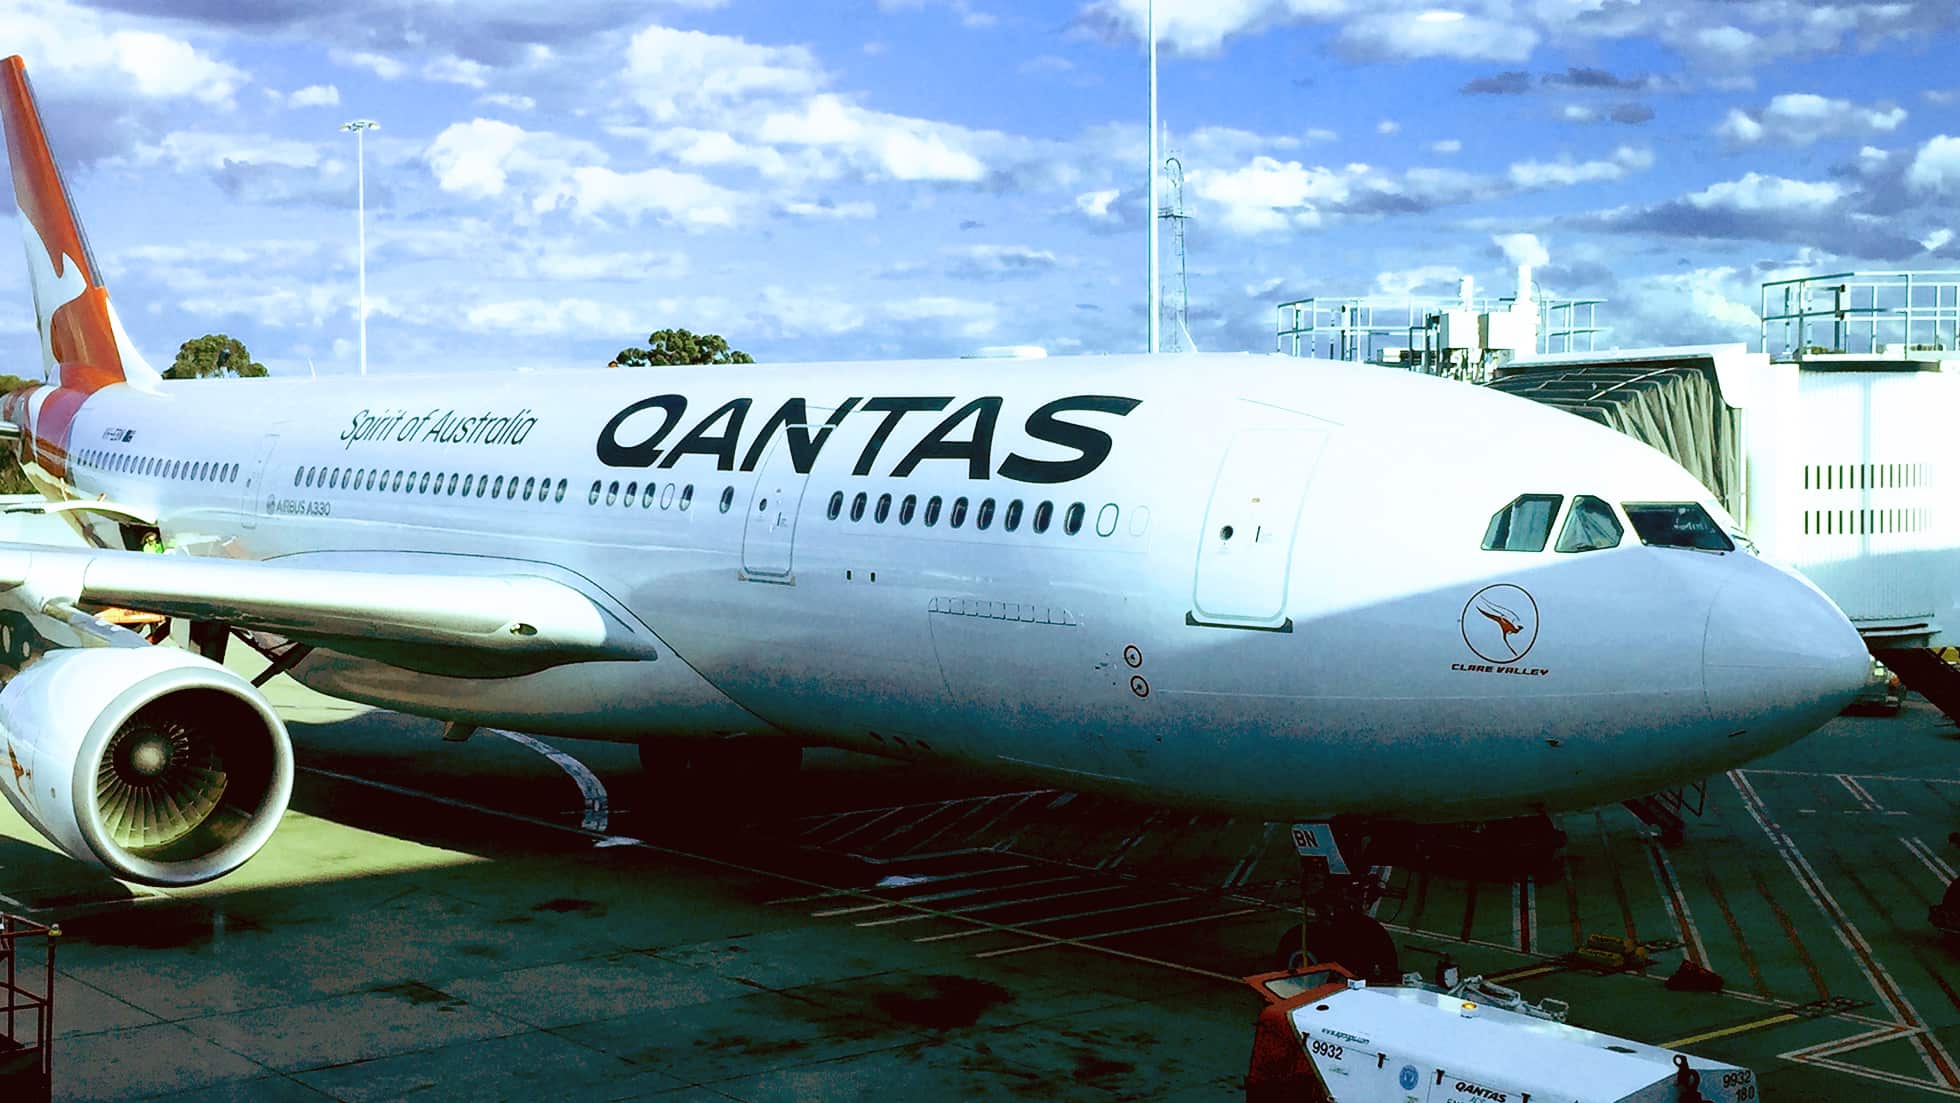 Qantas Melbourne to Perth Business Class Review